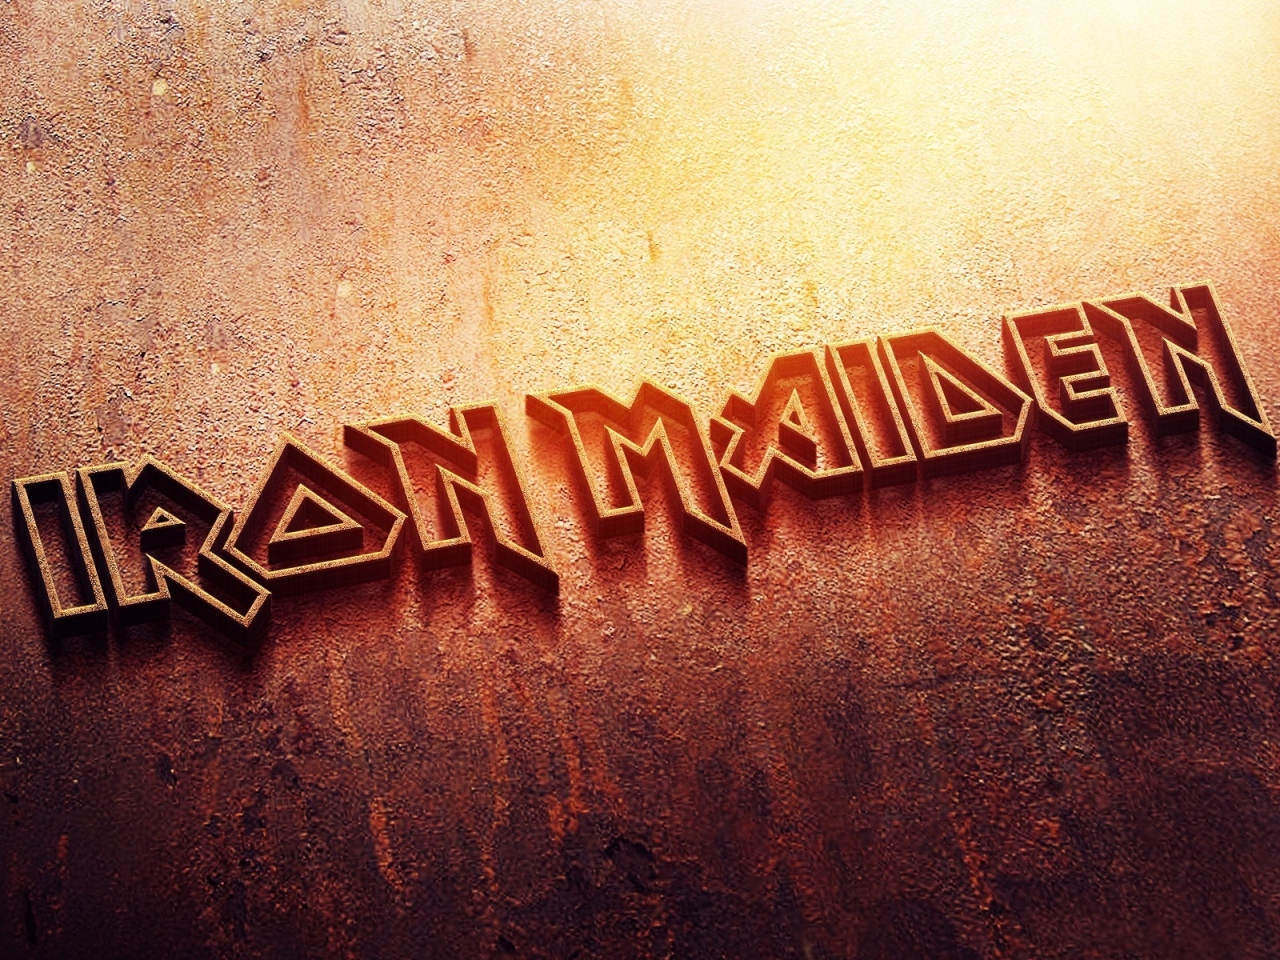 Iron Maiden Logo for 1280 x 960 resolution